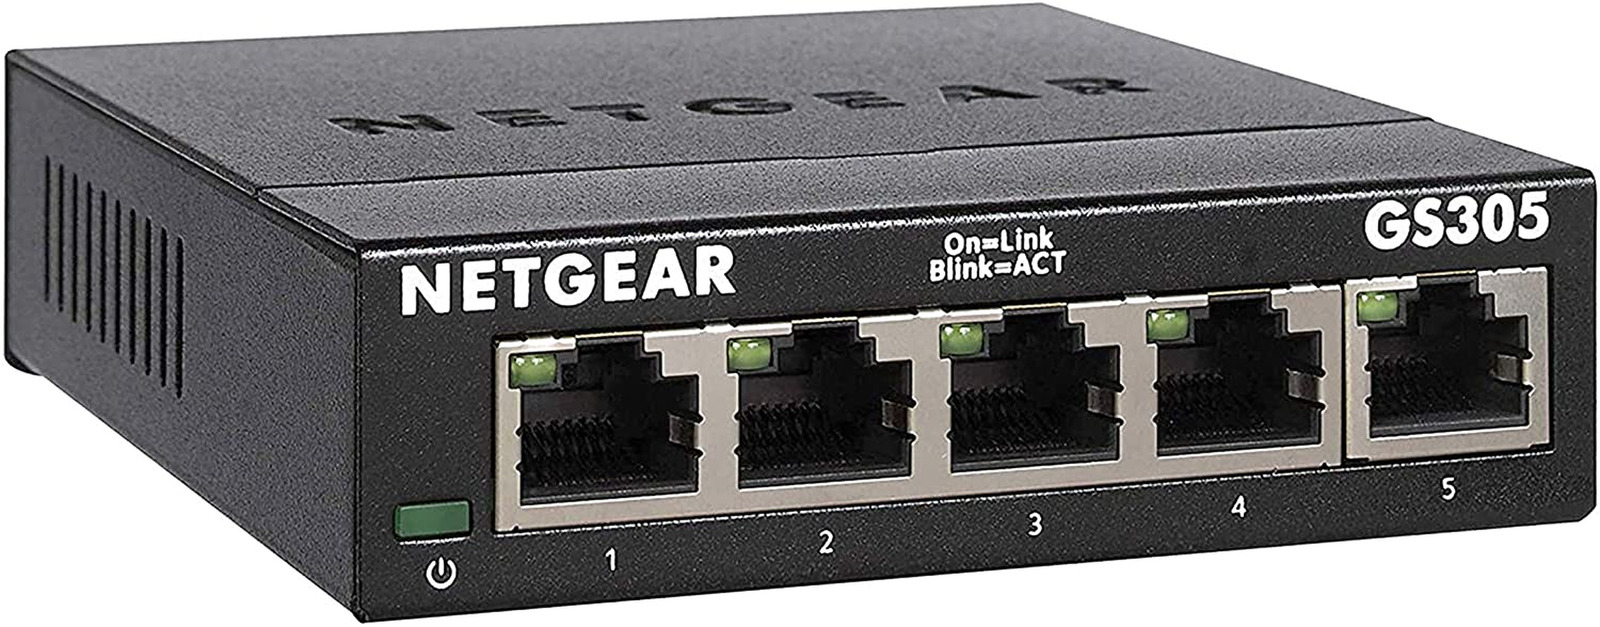 NETGEAR 5-PORT GIGABIT ETHERNET Unmanaged Switch GS305 Home Office Network Hub..